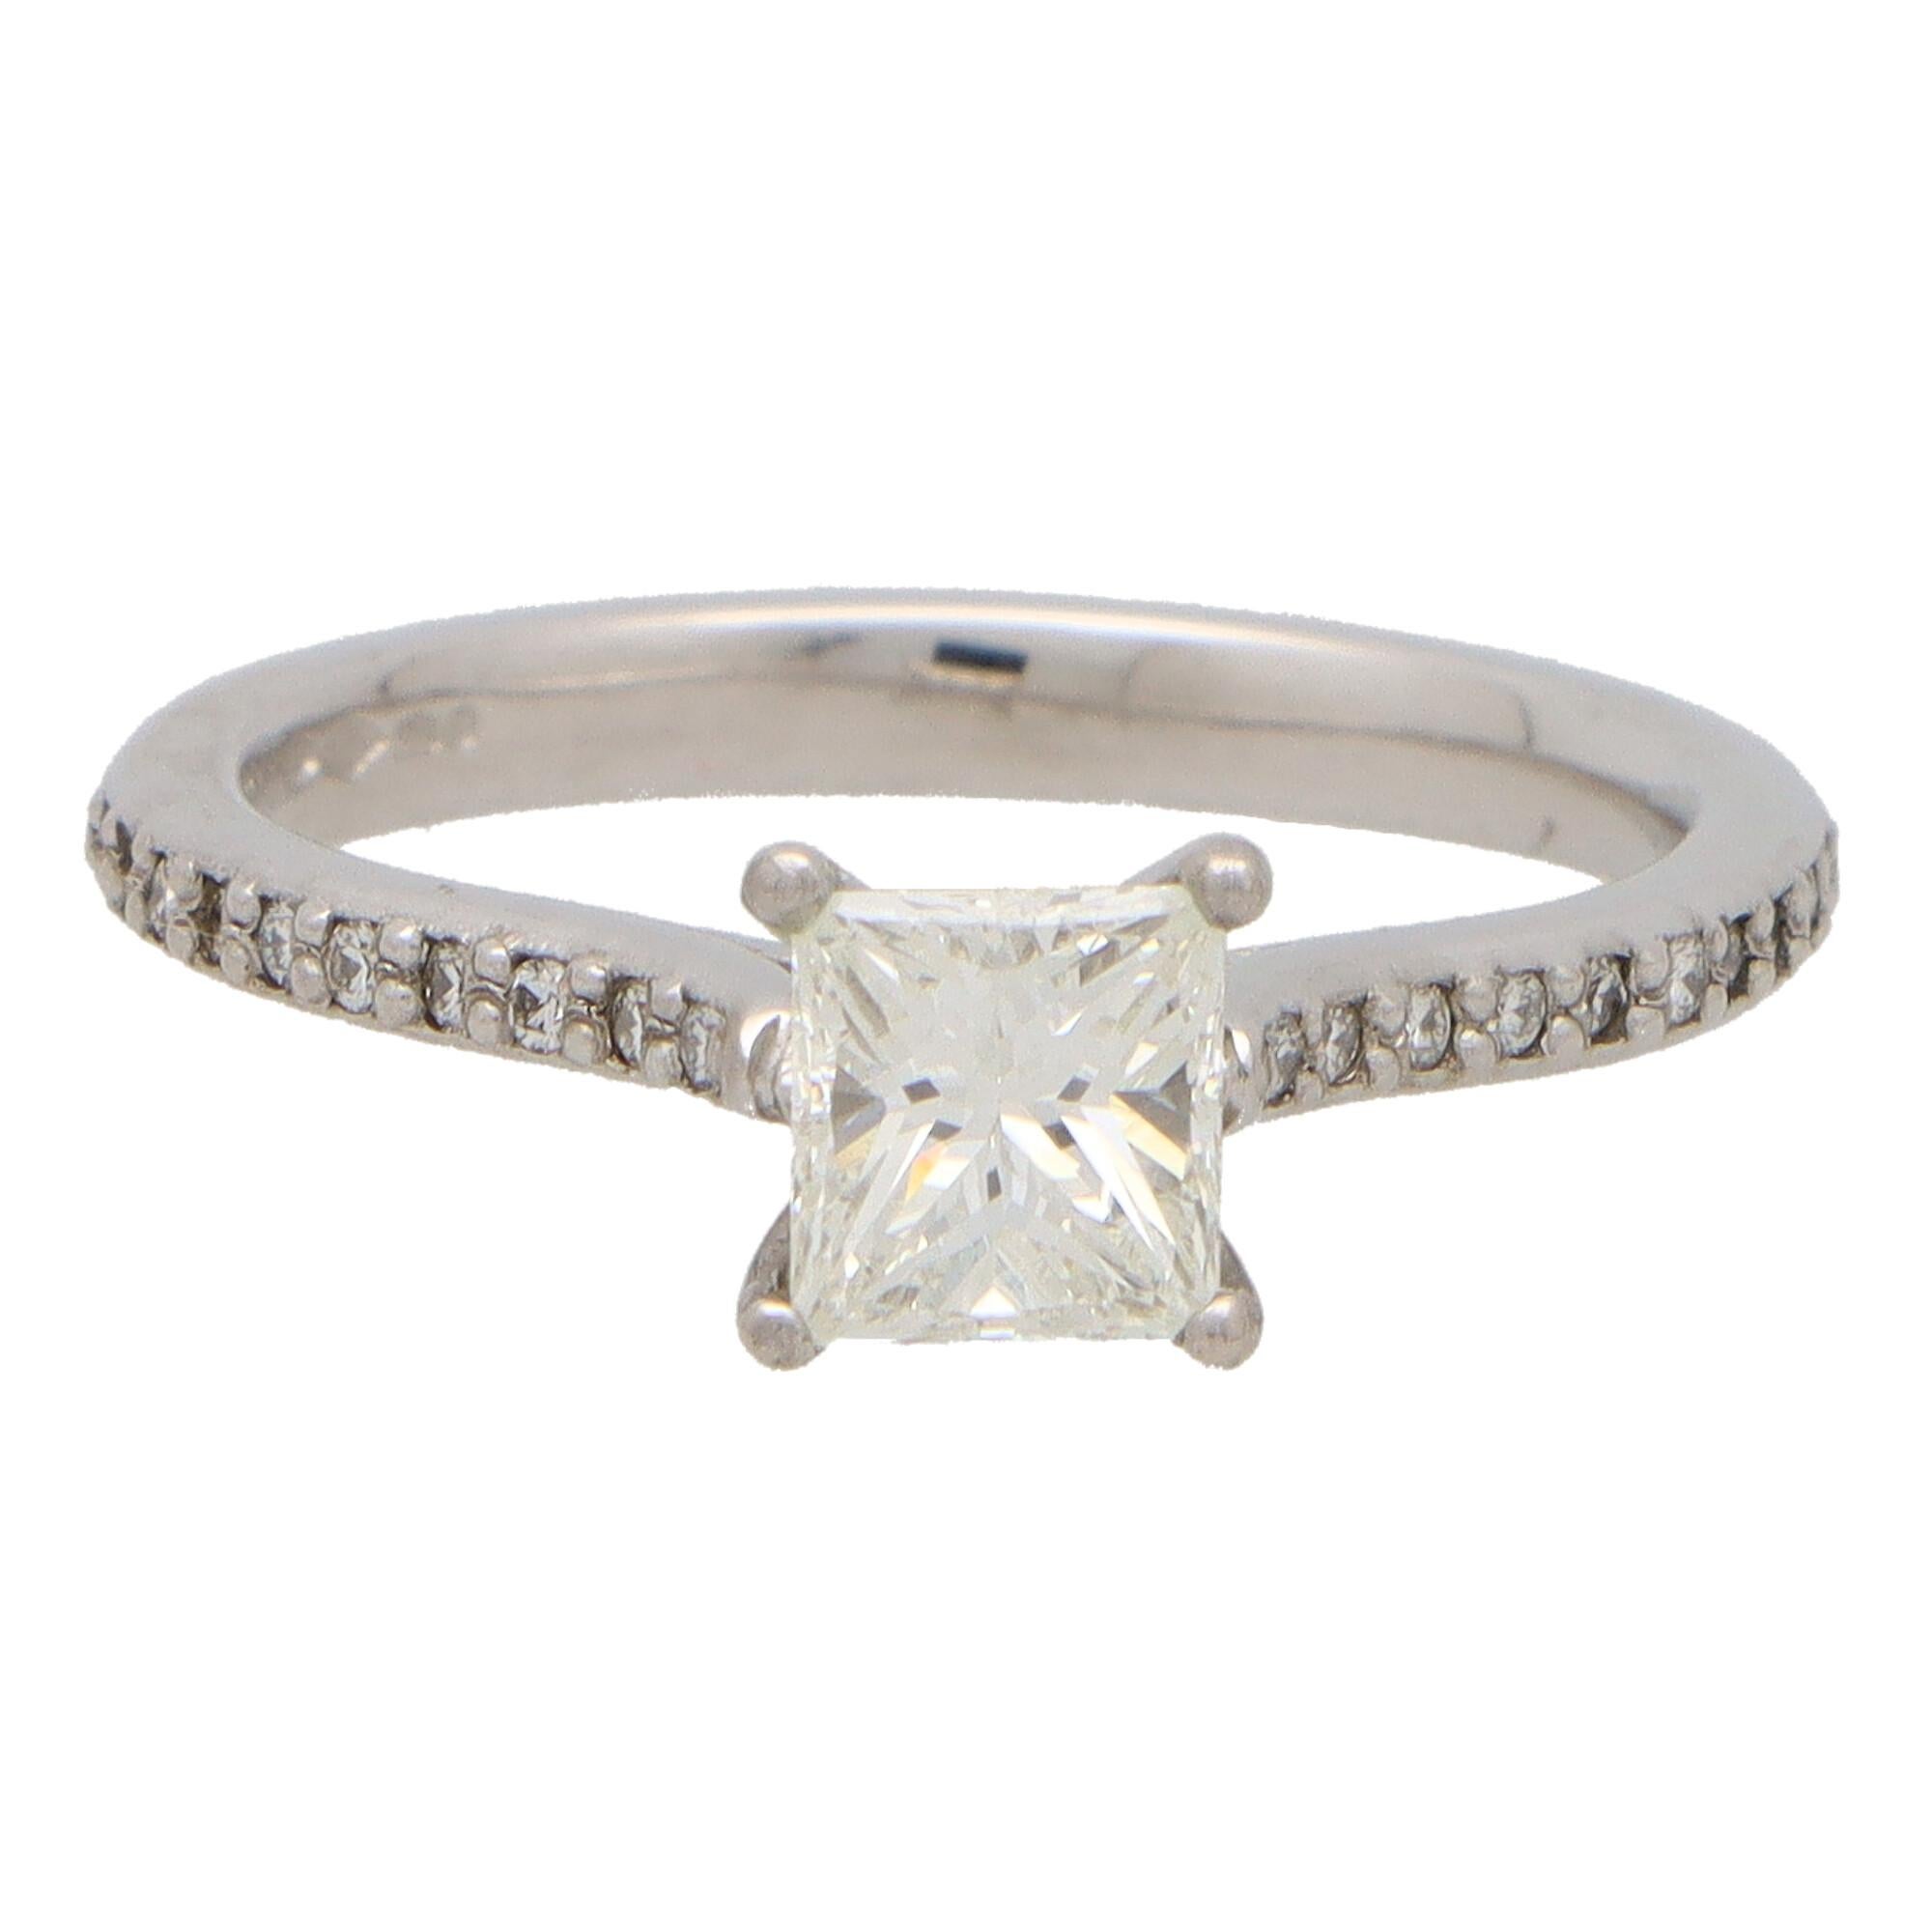 Princess Cut Diamond Solitaire Ring With Diamond Shoulders Set in Platinum